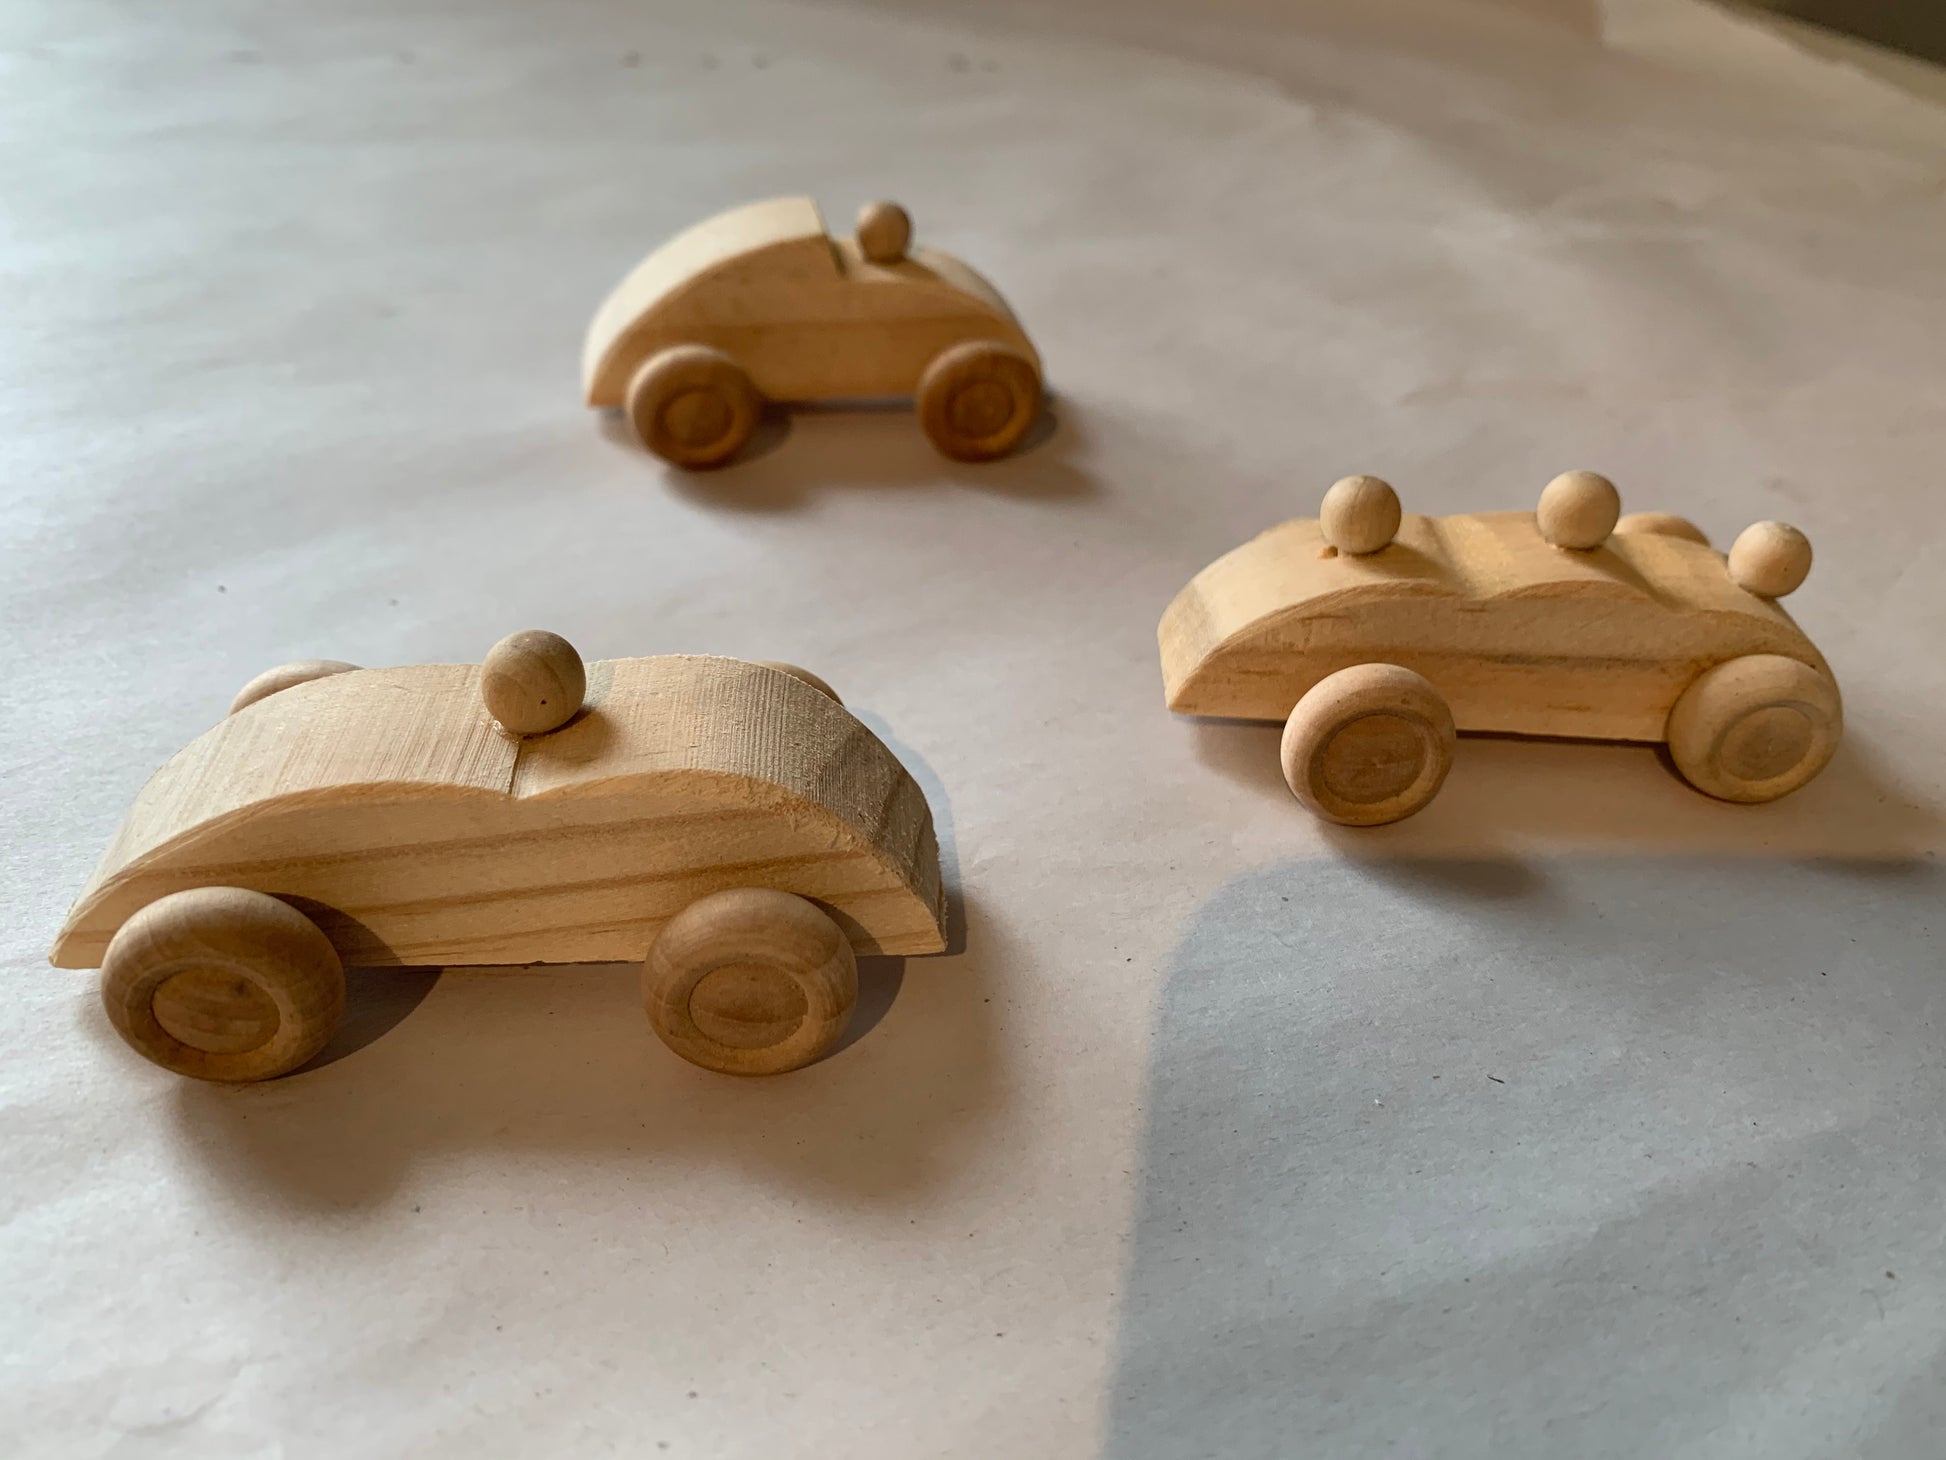 Wooden Race Car